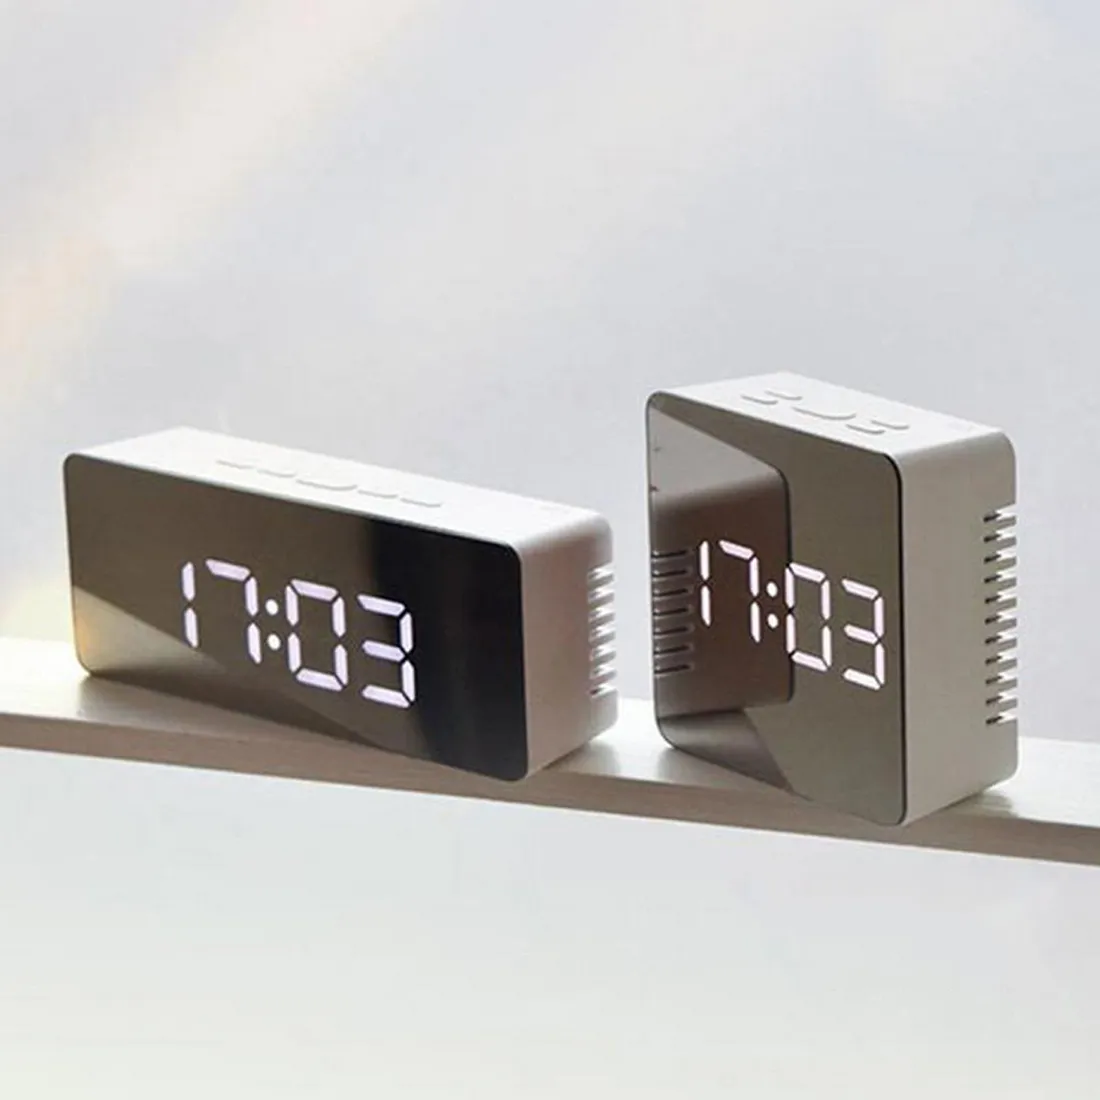 Reloj Despertador con espejo LED de 140mm, reloj Digital con pantalla de repetición, luz Led nocturna para mesa, reloj despertador de escritorio, Despertador 210310